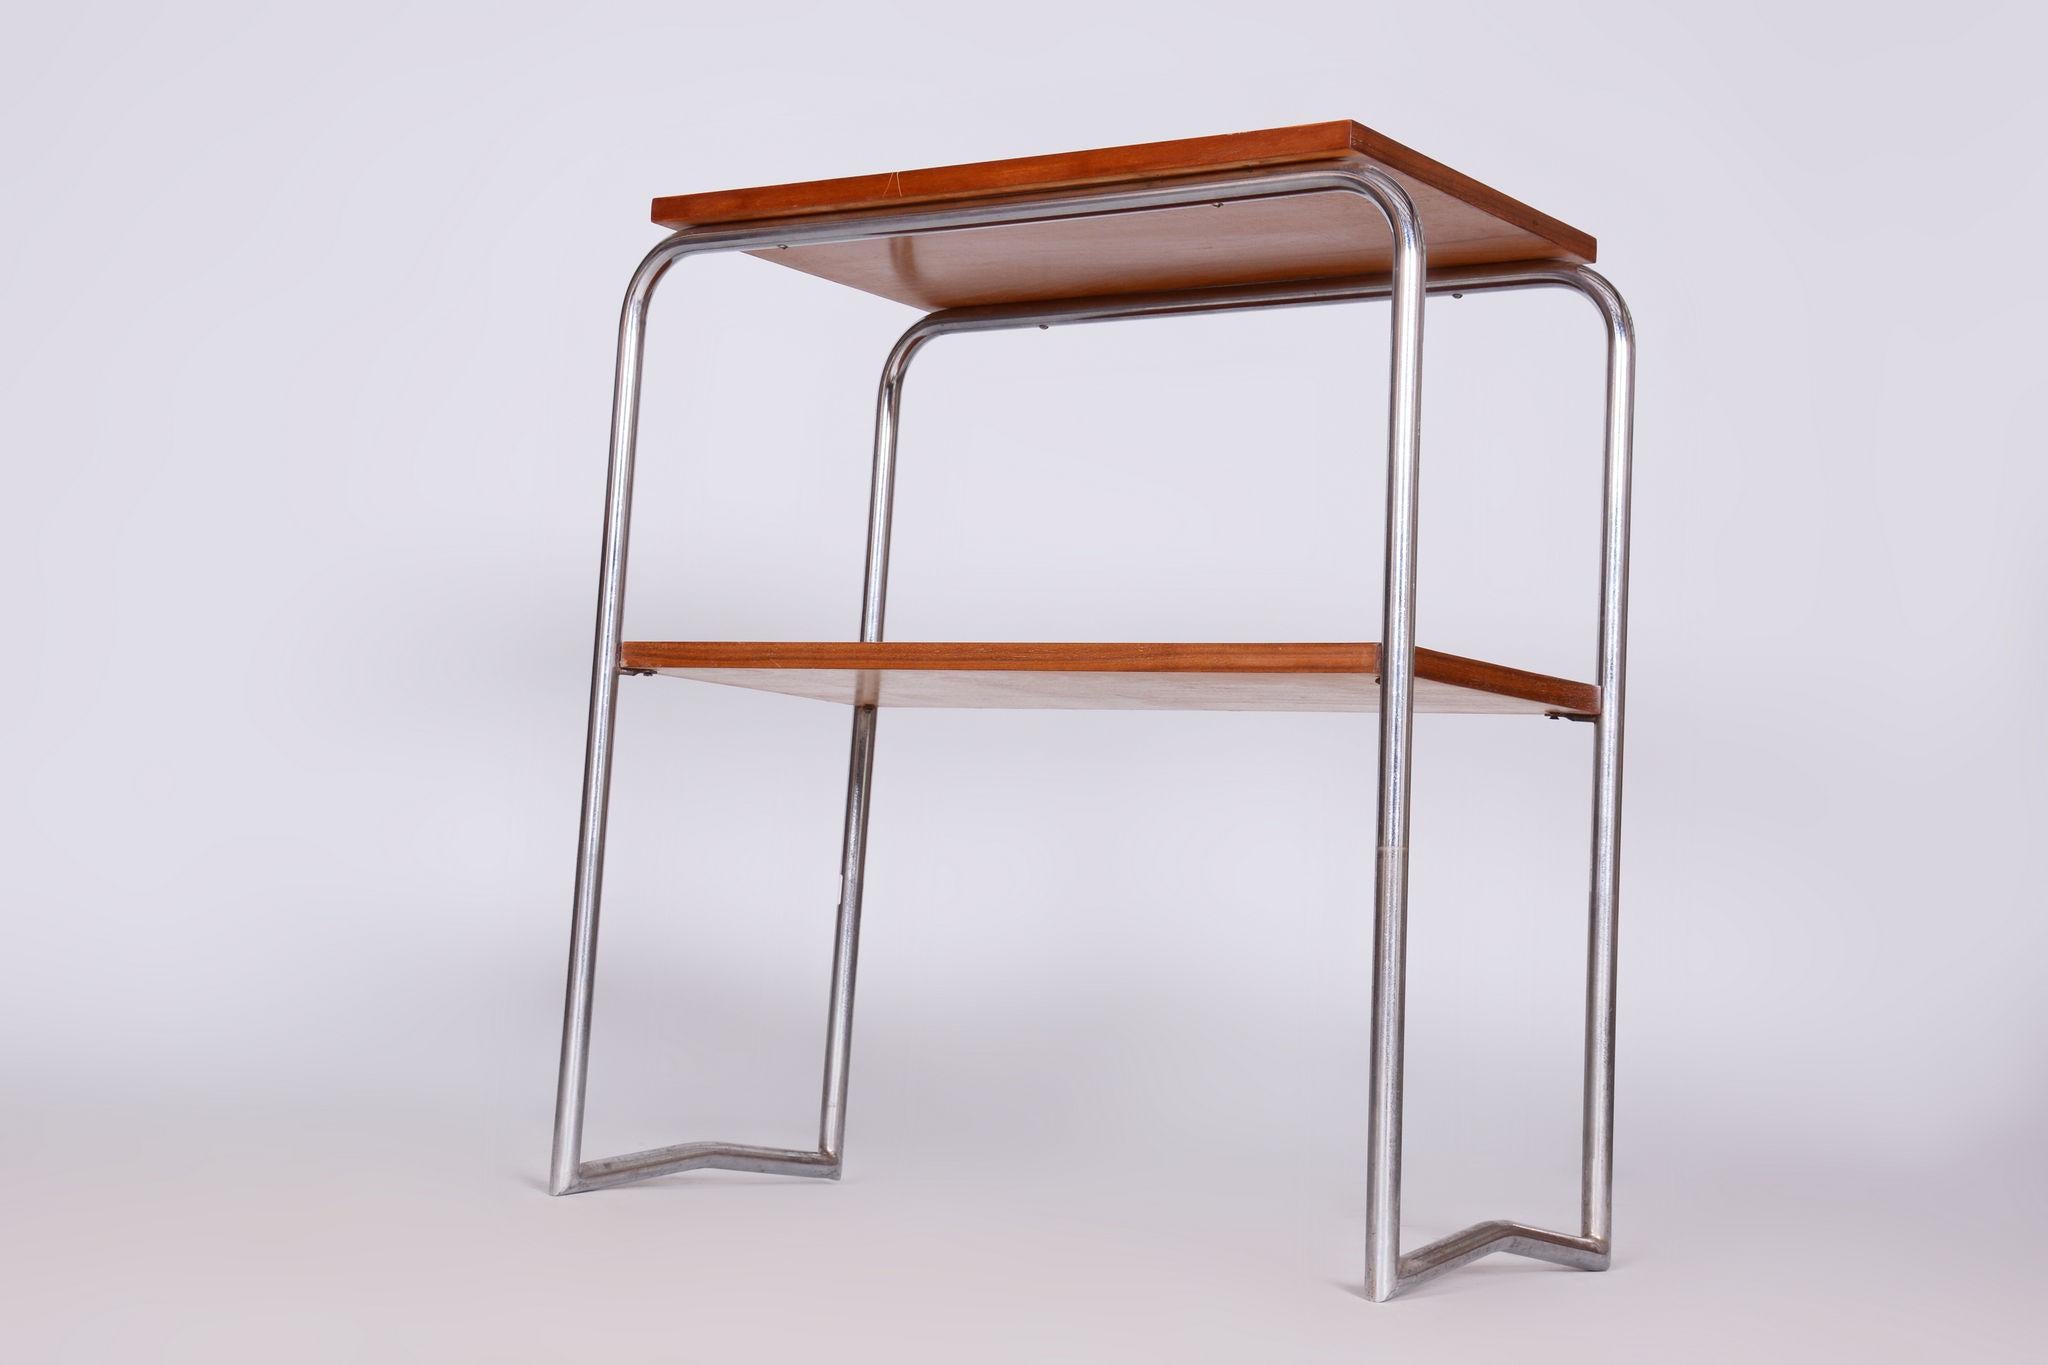 Restored Bauhaus Side Table, Hynek Gottwald, Walnut, Chrome, Czechia, 1930s In Good Condition For Sale In Horomerice, CZ